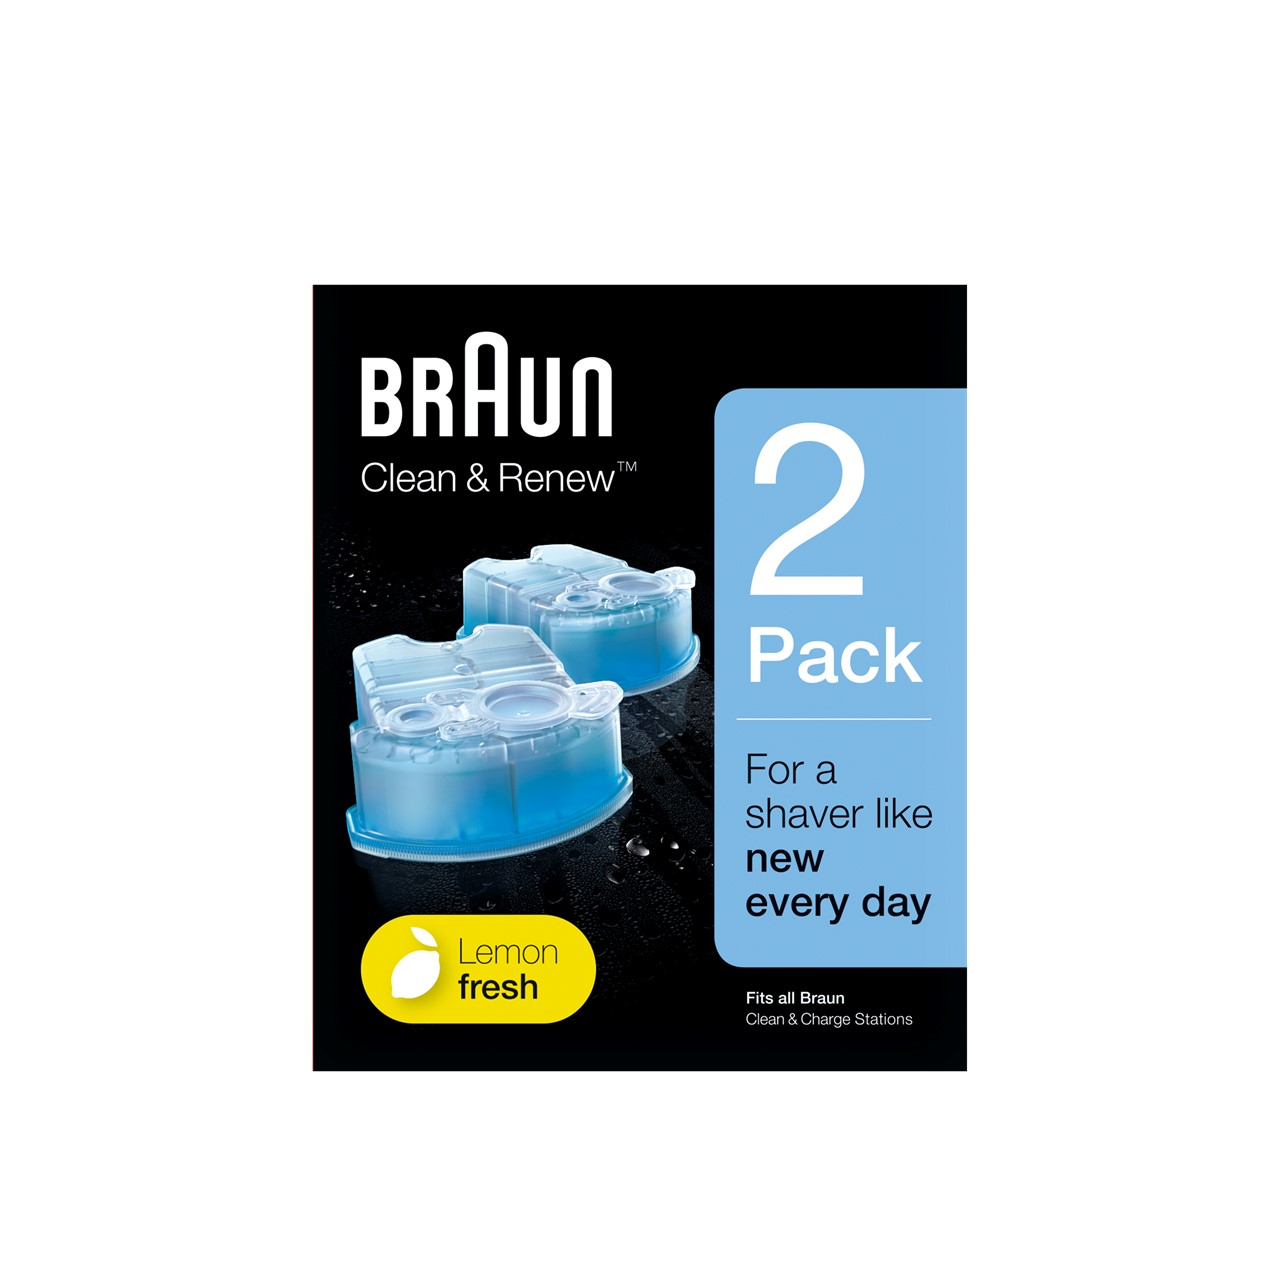 Clean & Charge station: Braun Clean & Renew cartridge refills